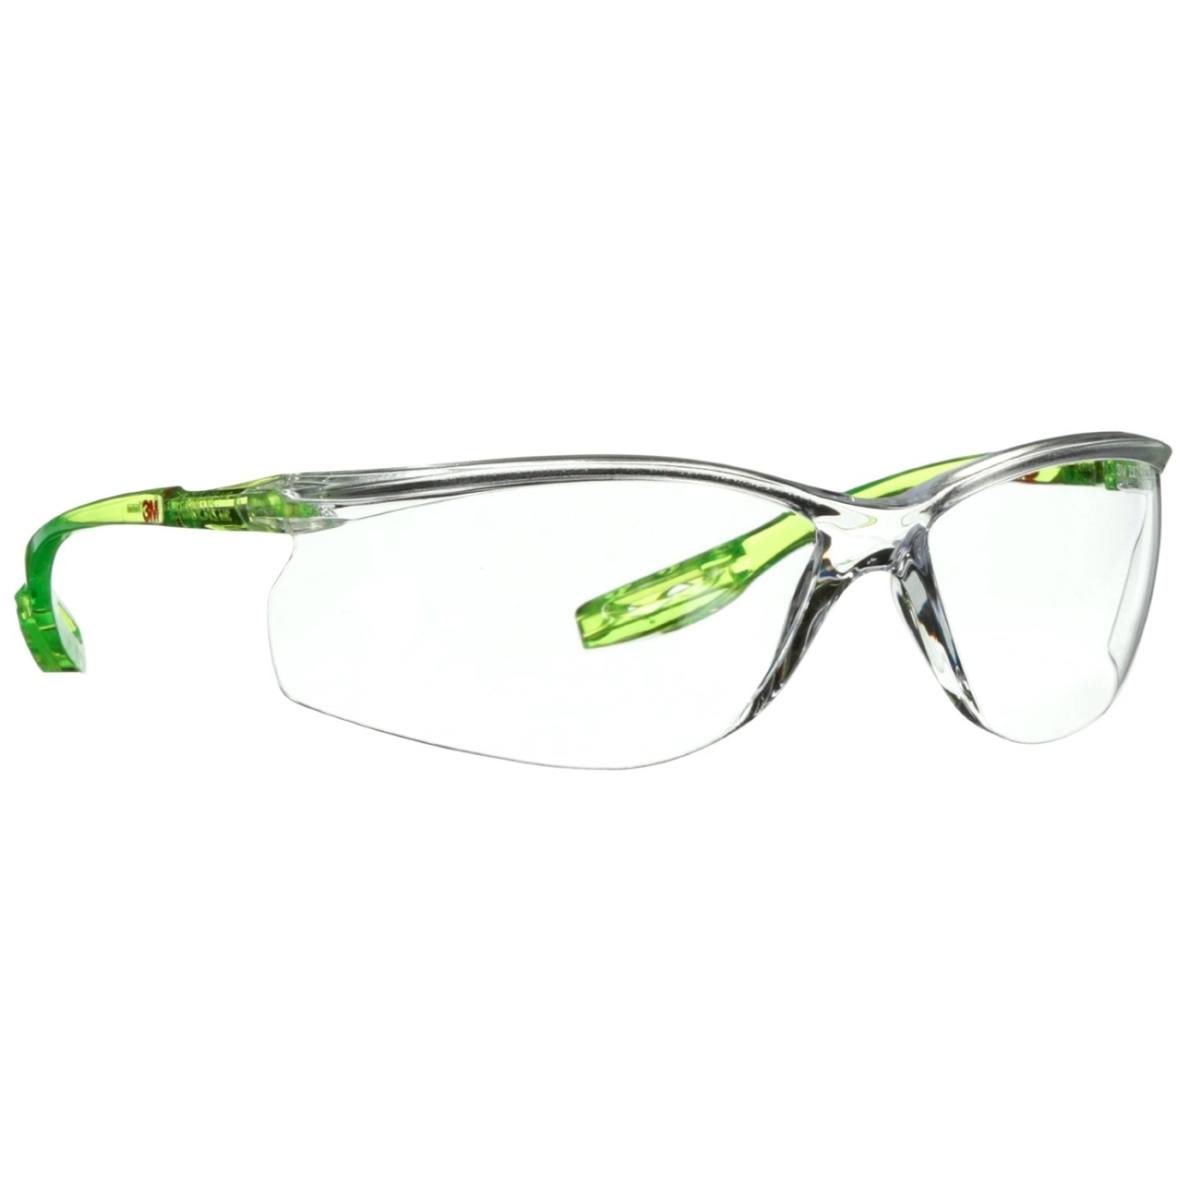 occhiali di sicurezza 3M Solus serie CCS, aste verde lime, rivestimento Scotchgard antiappannamento/antigraffio (K &amp; N), lenti chiare, SCCS01SGAF-GRN-EU